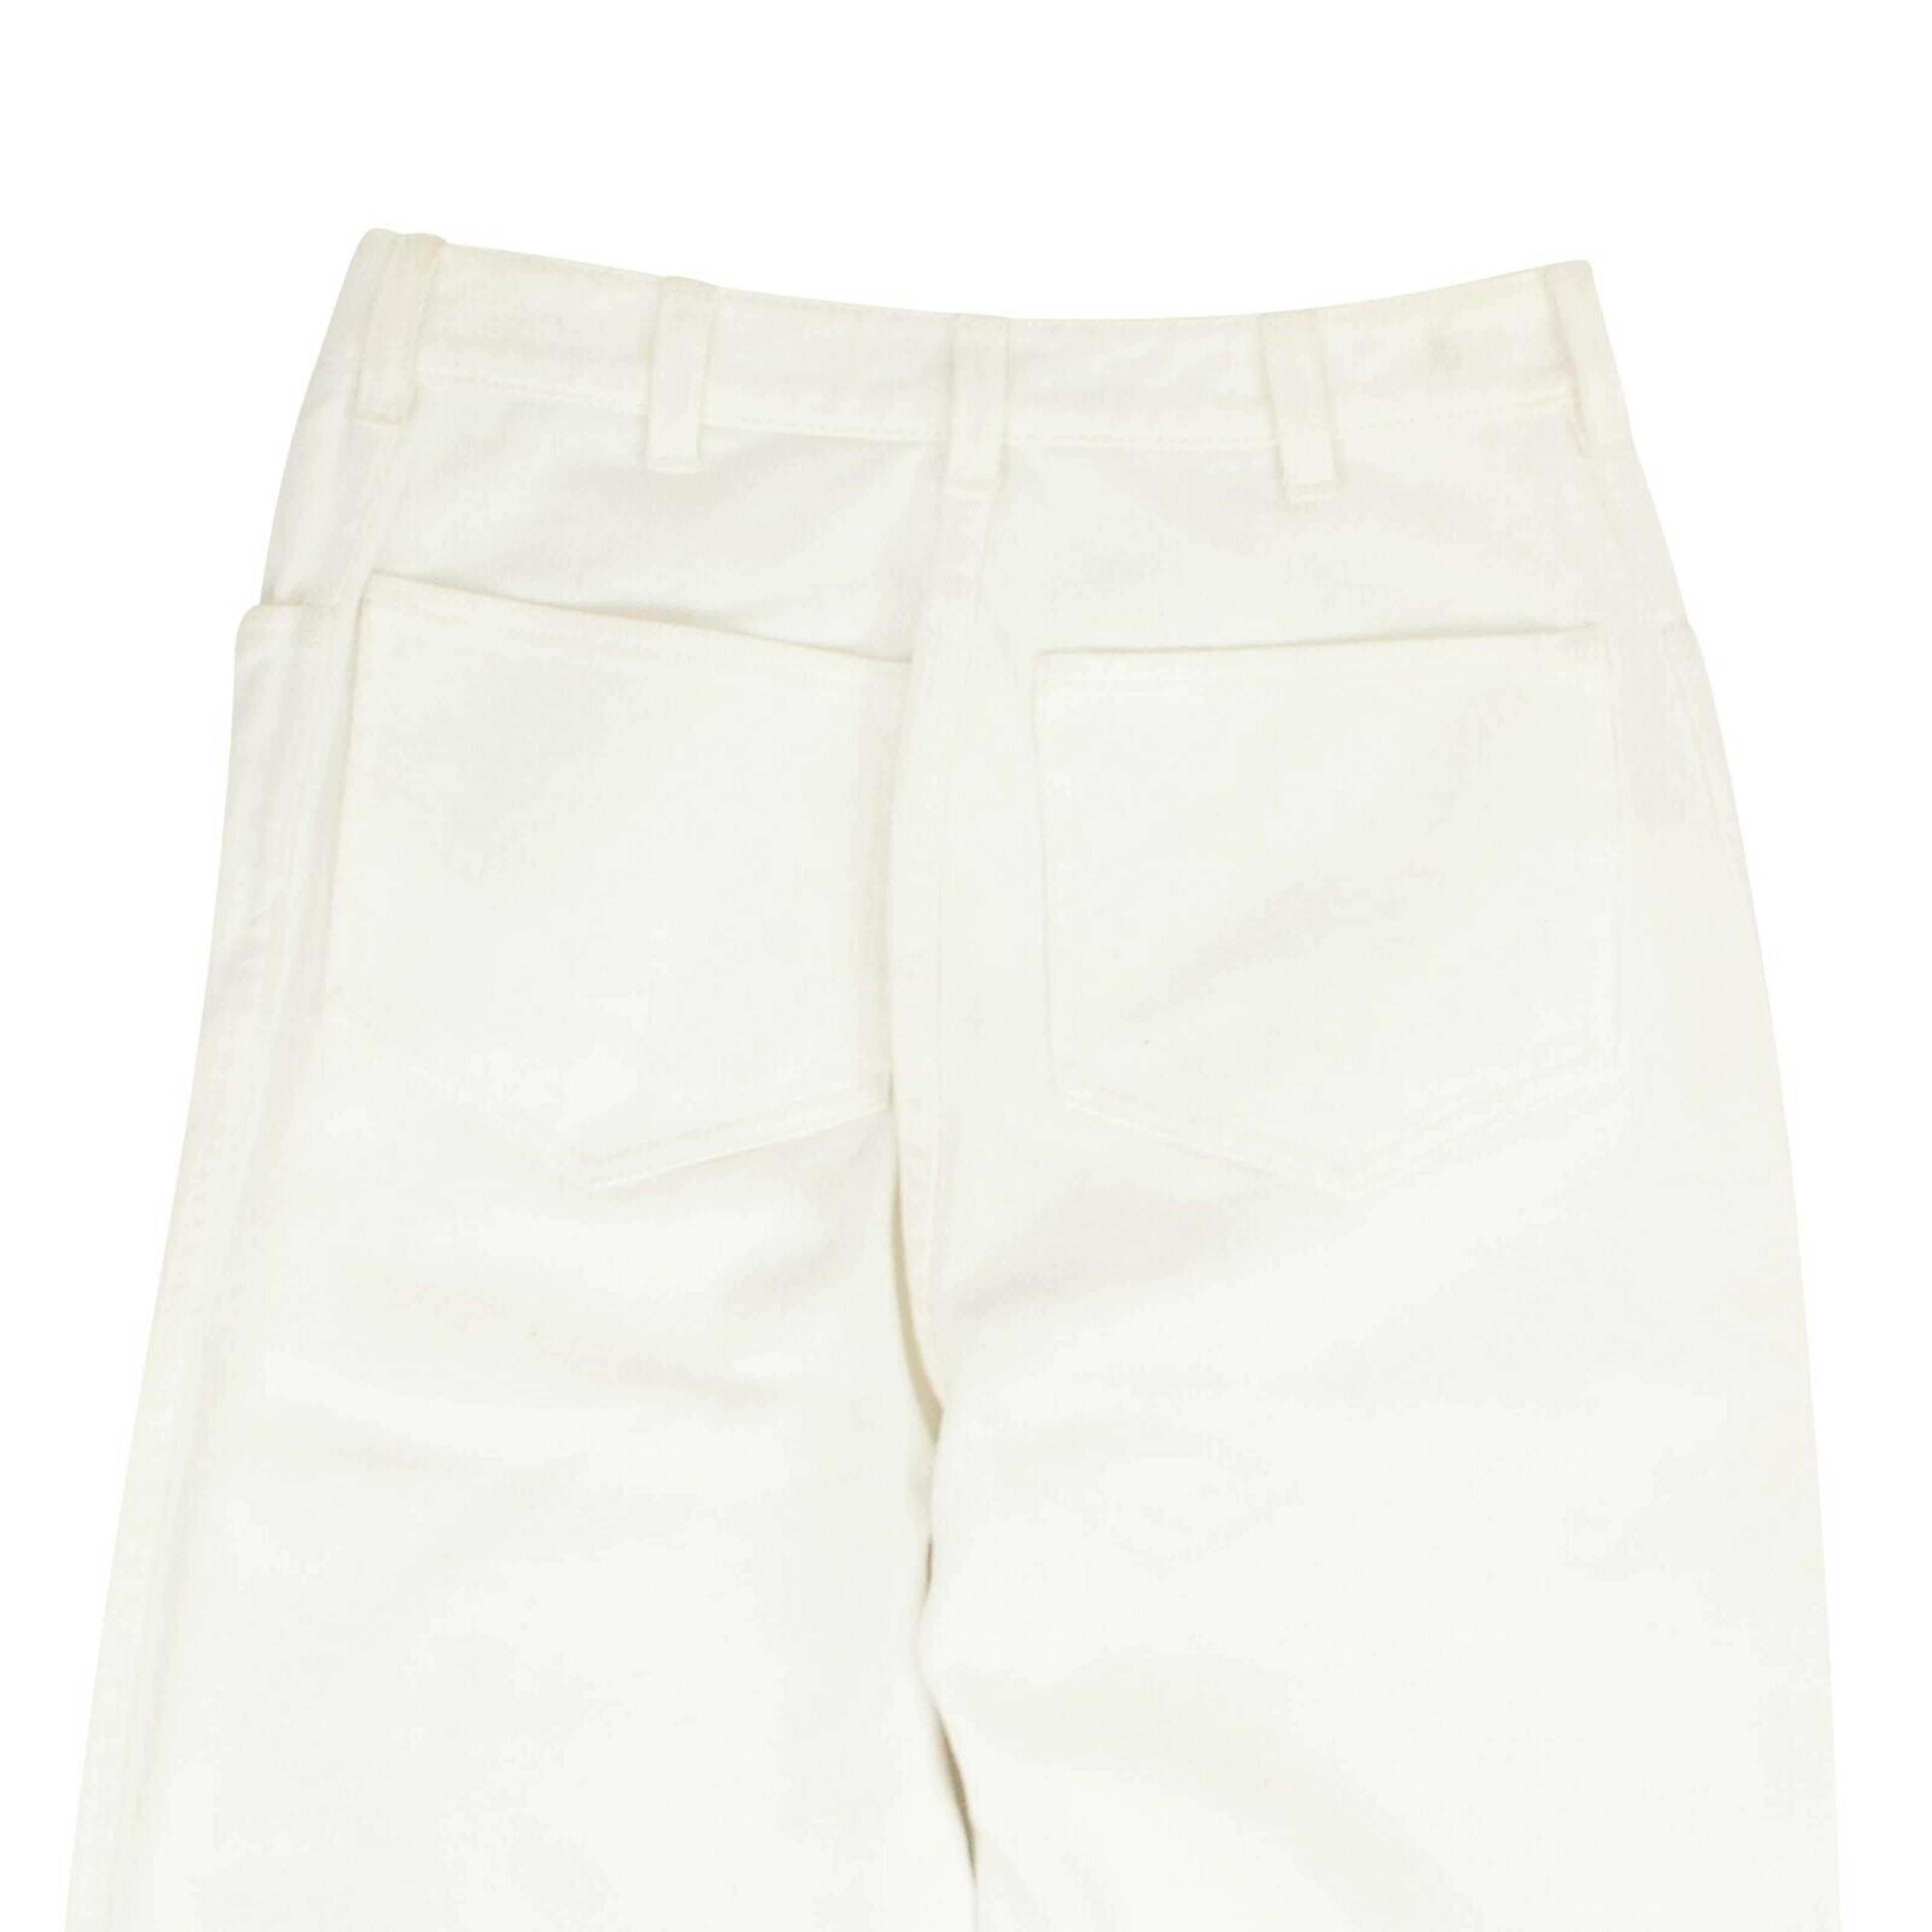 Alternate View 3 of White Denim Mid Rise Straight Jeans